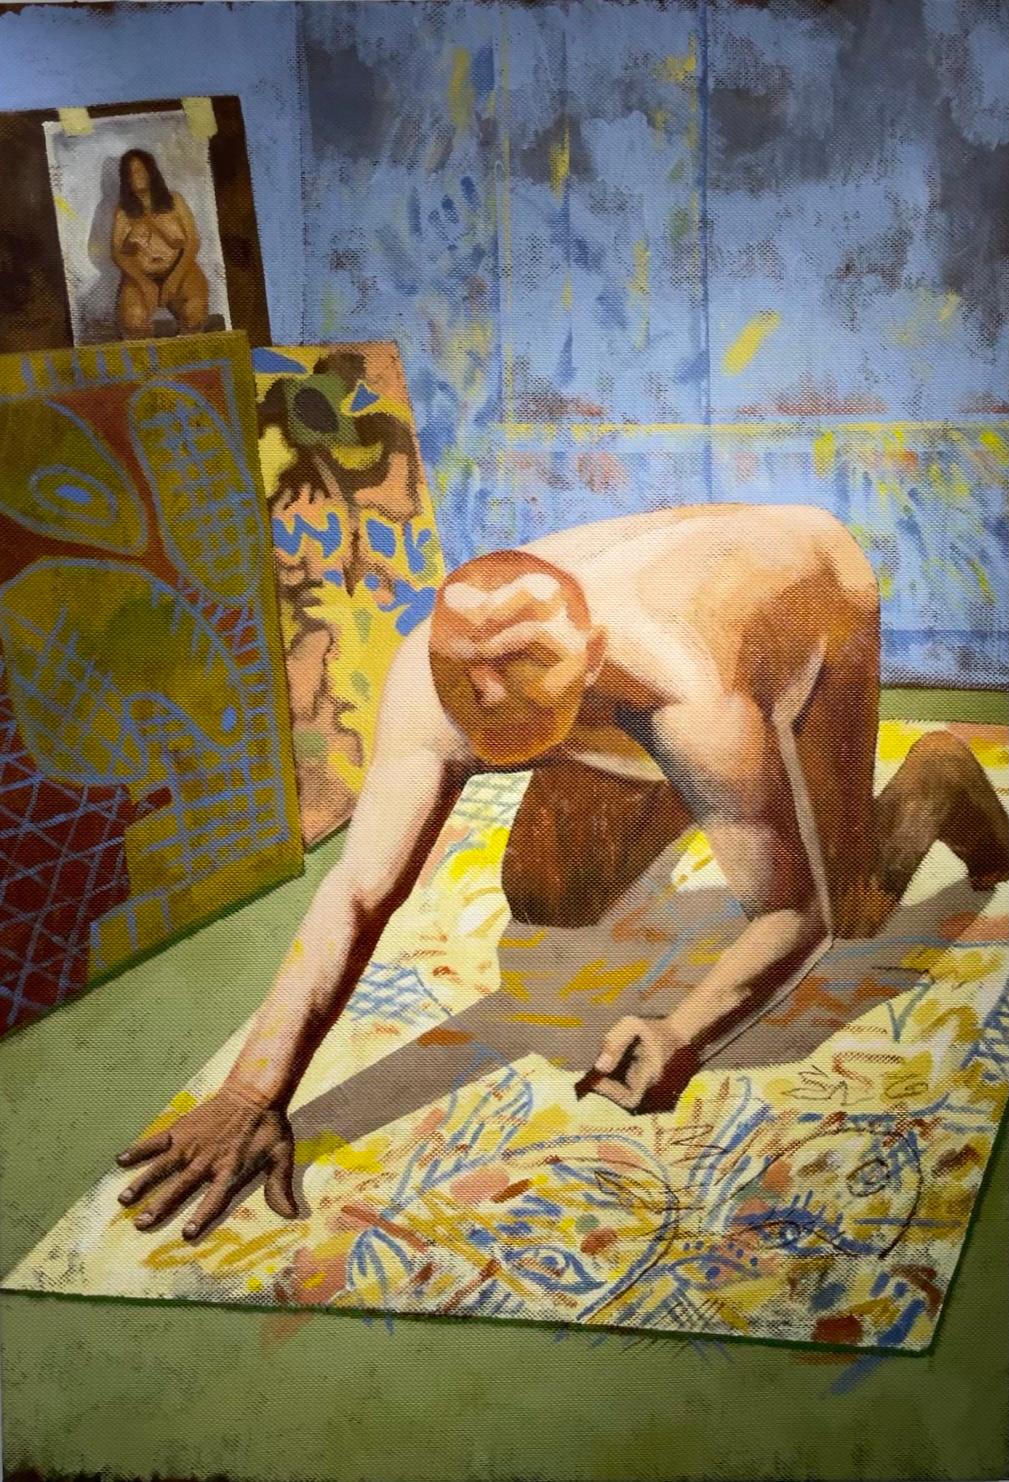 Alexandru Rădvan Nude Painting - Le chef d'oeuvre inconnu 2 - 21st Century, Male, Yellow, Blue, Contemporary Art